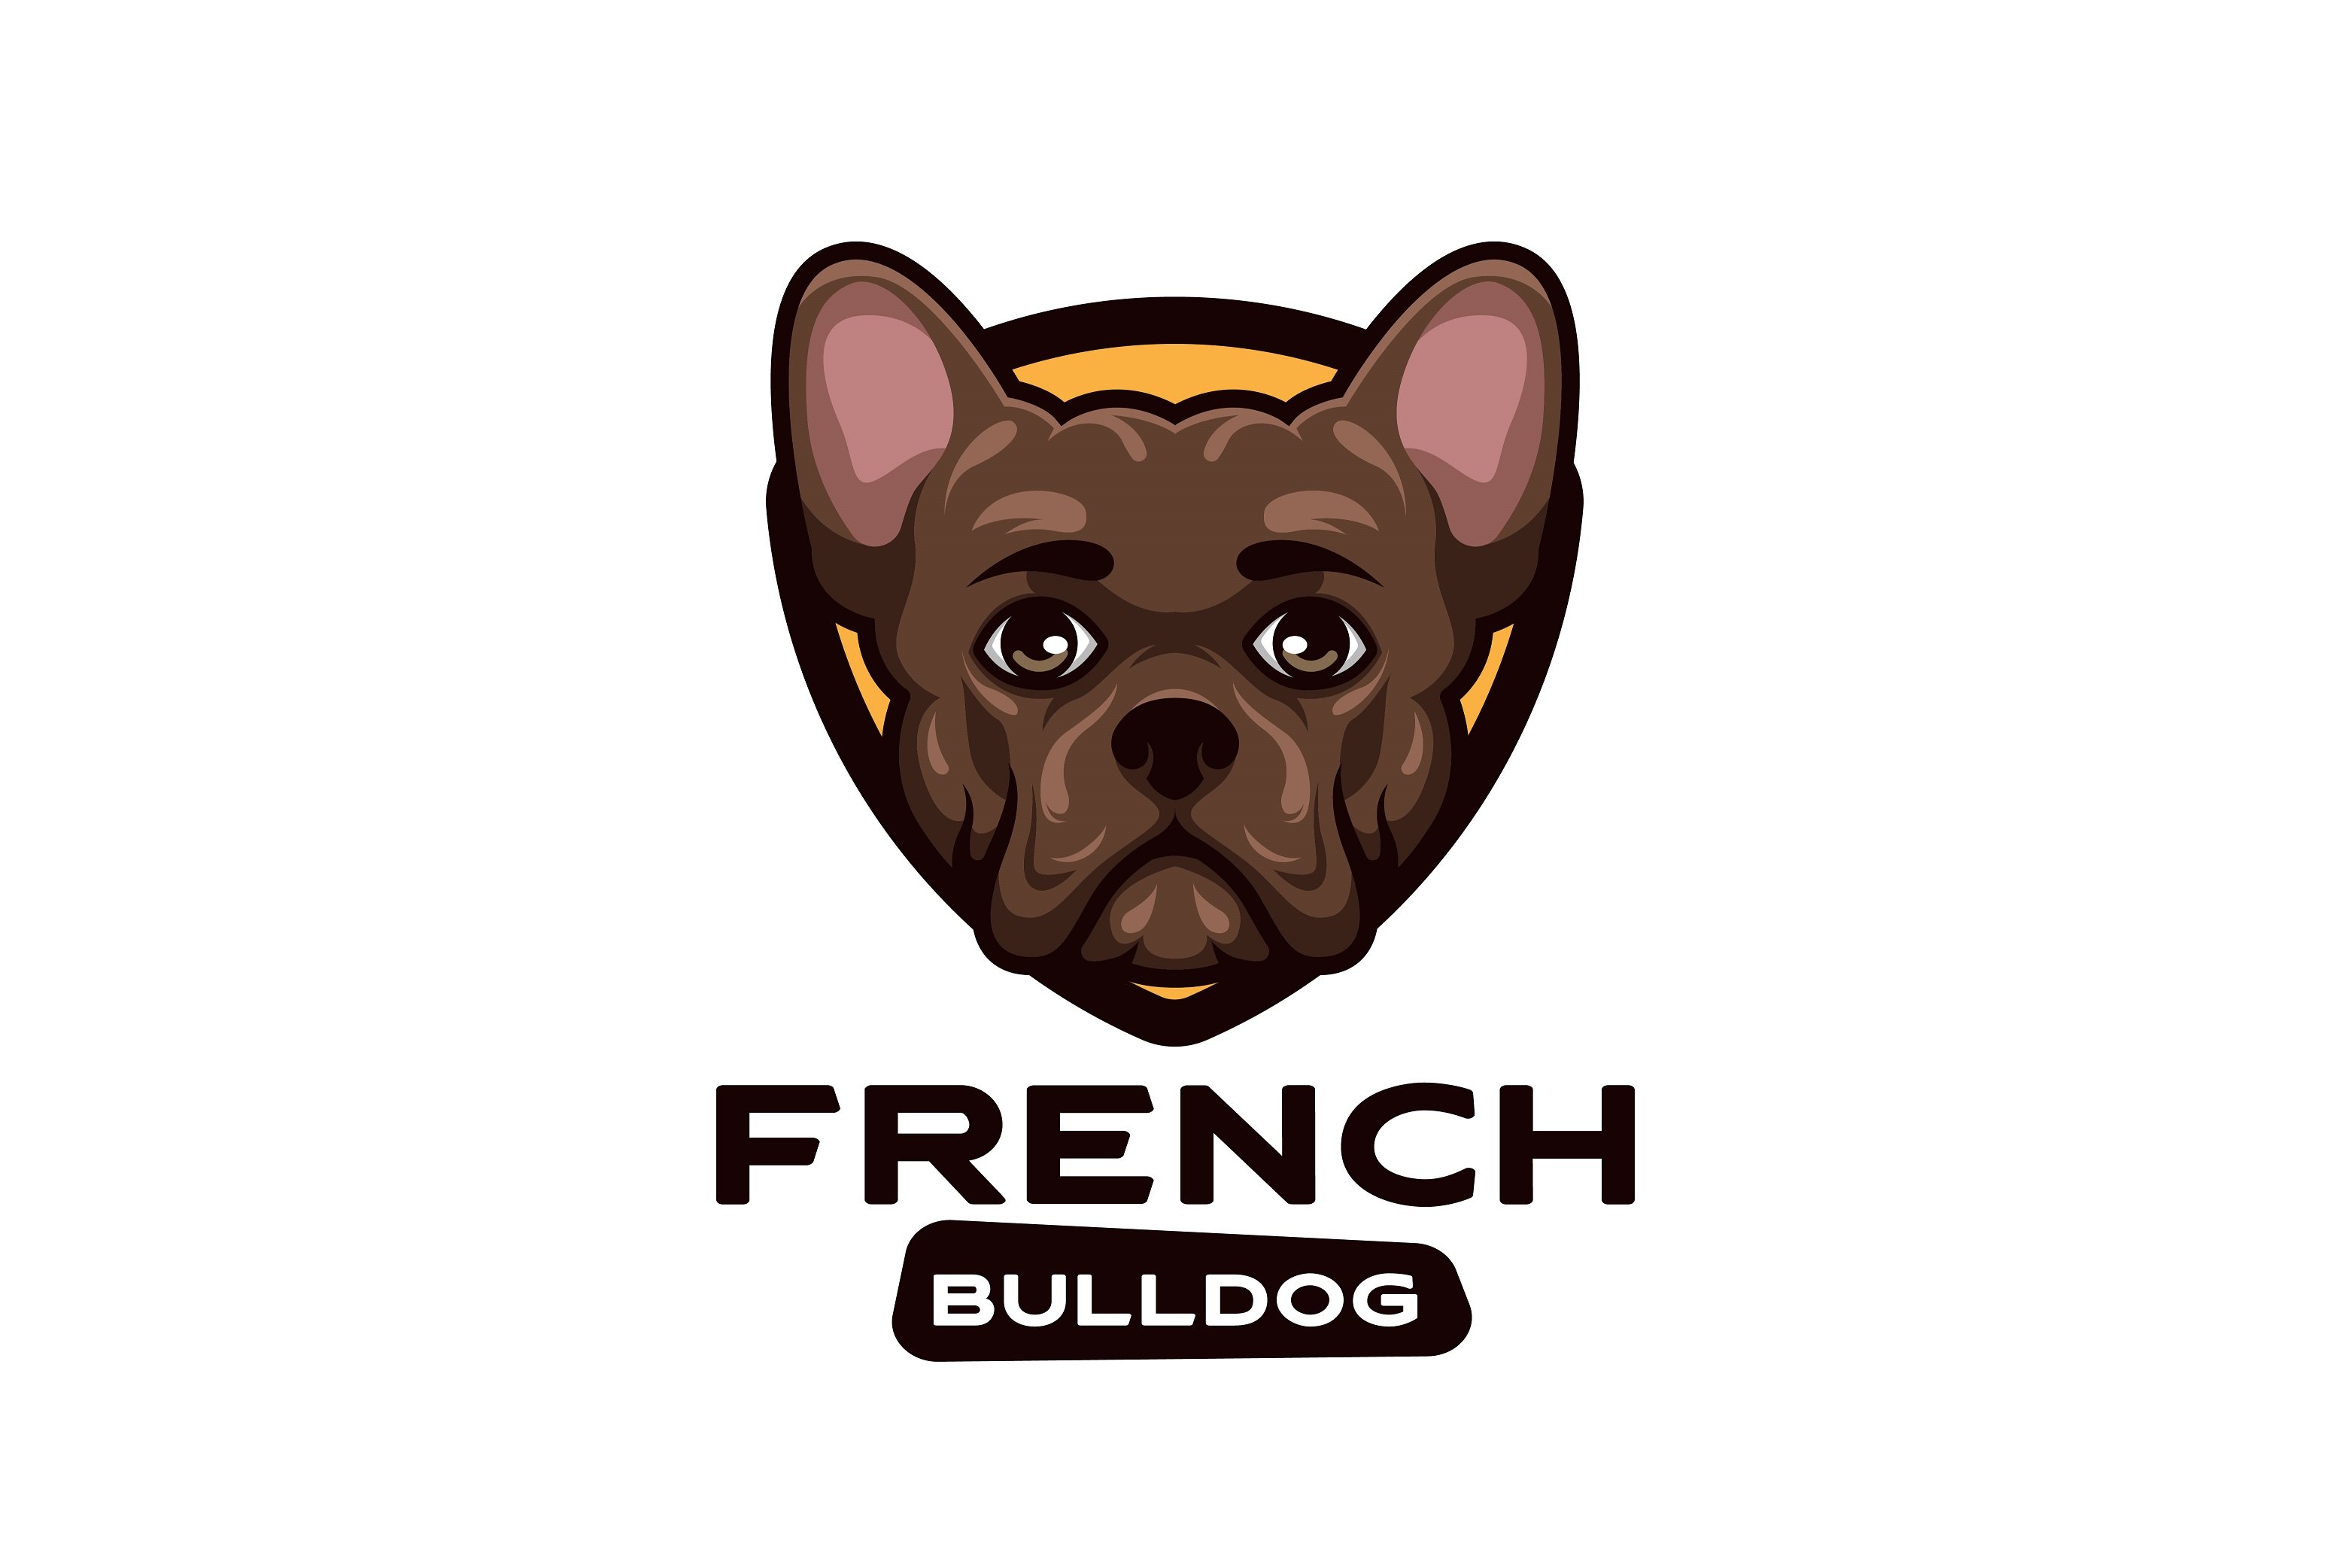 French Buldog Cartoon Logo cover image.